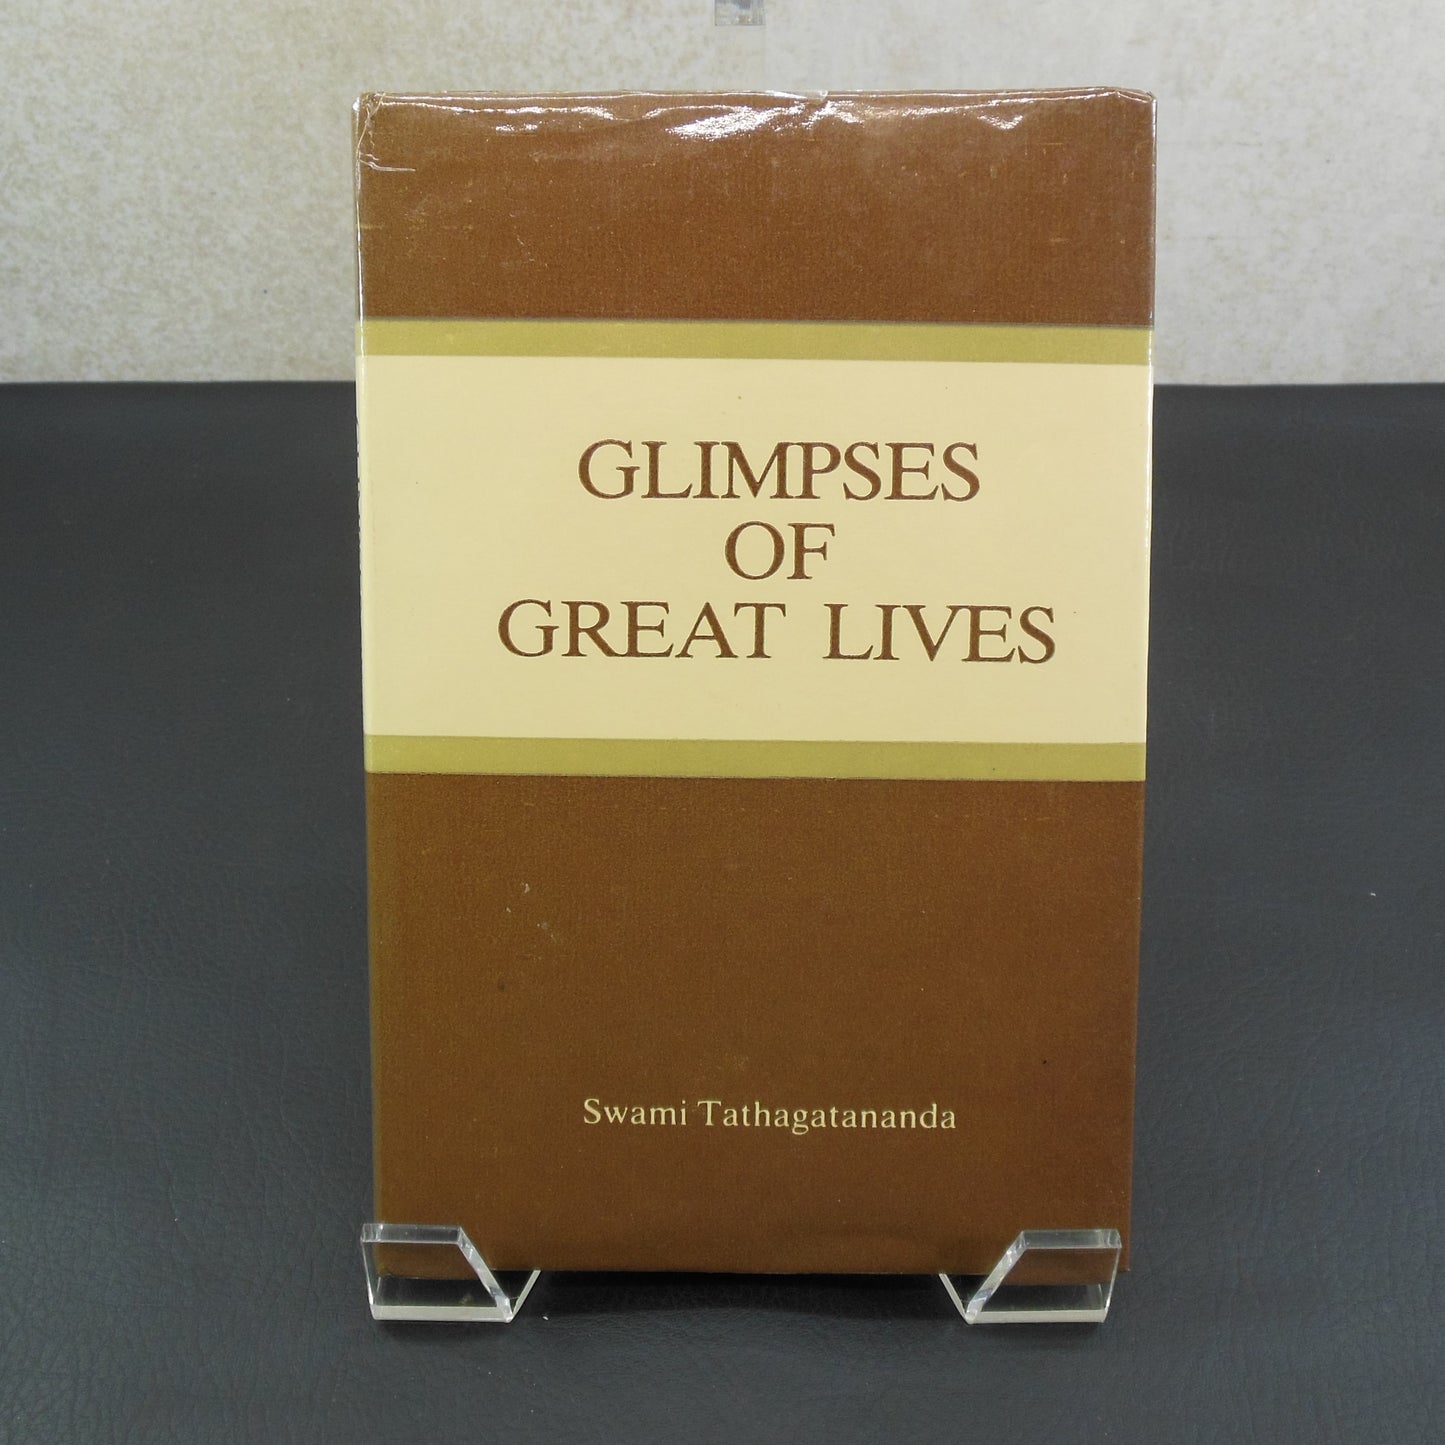 Swami Tathagatananda Signed Book - Glimpses of Great Lives 1989